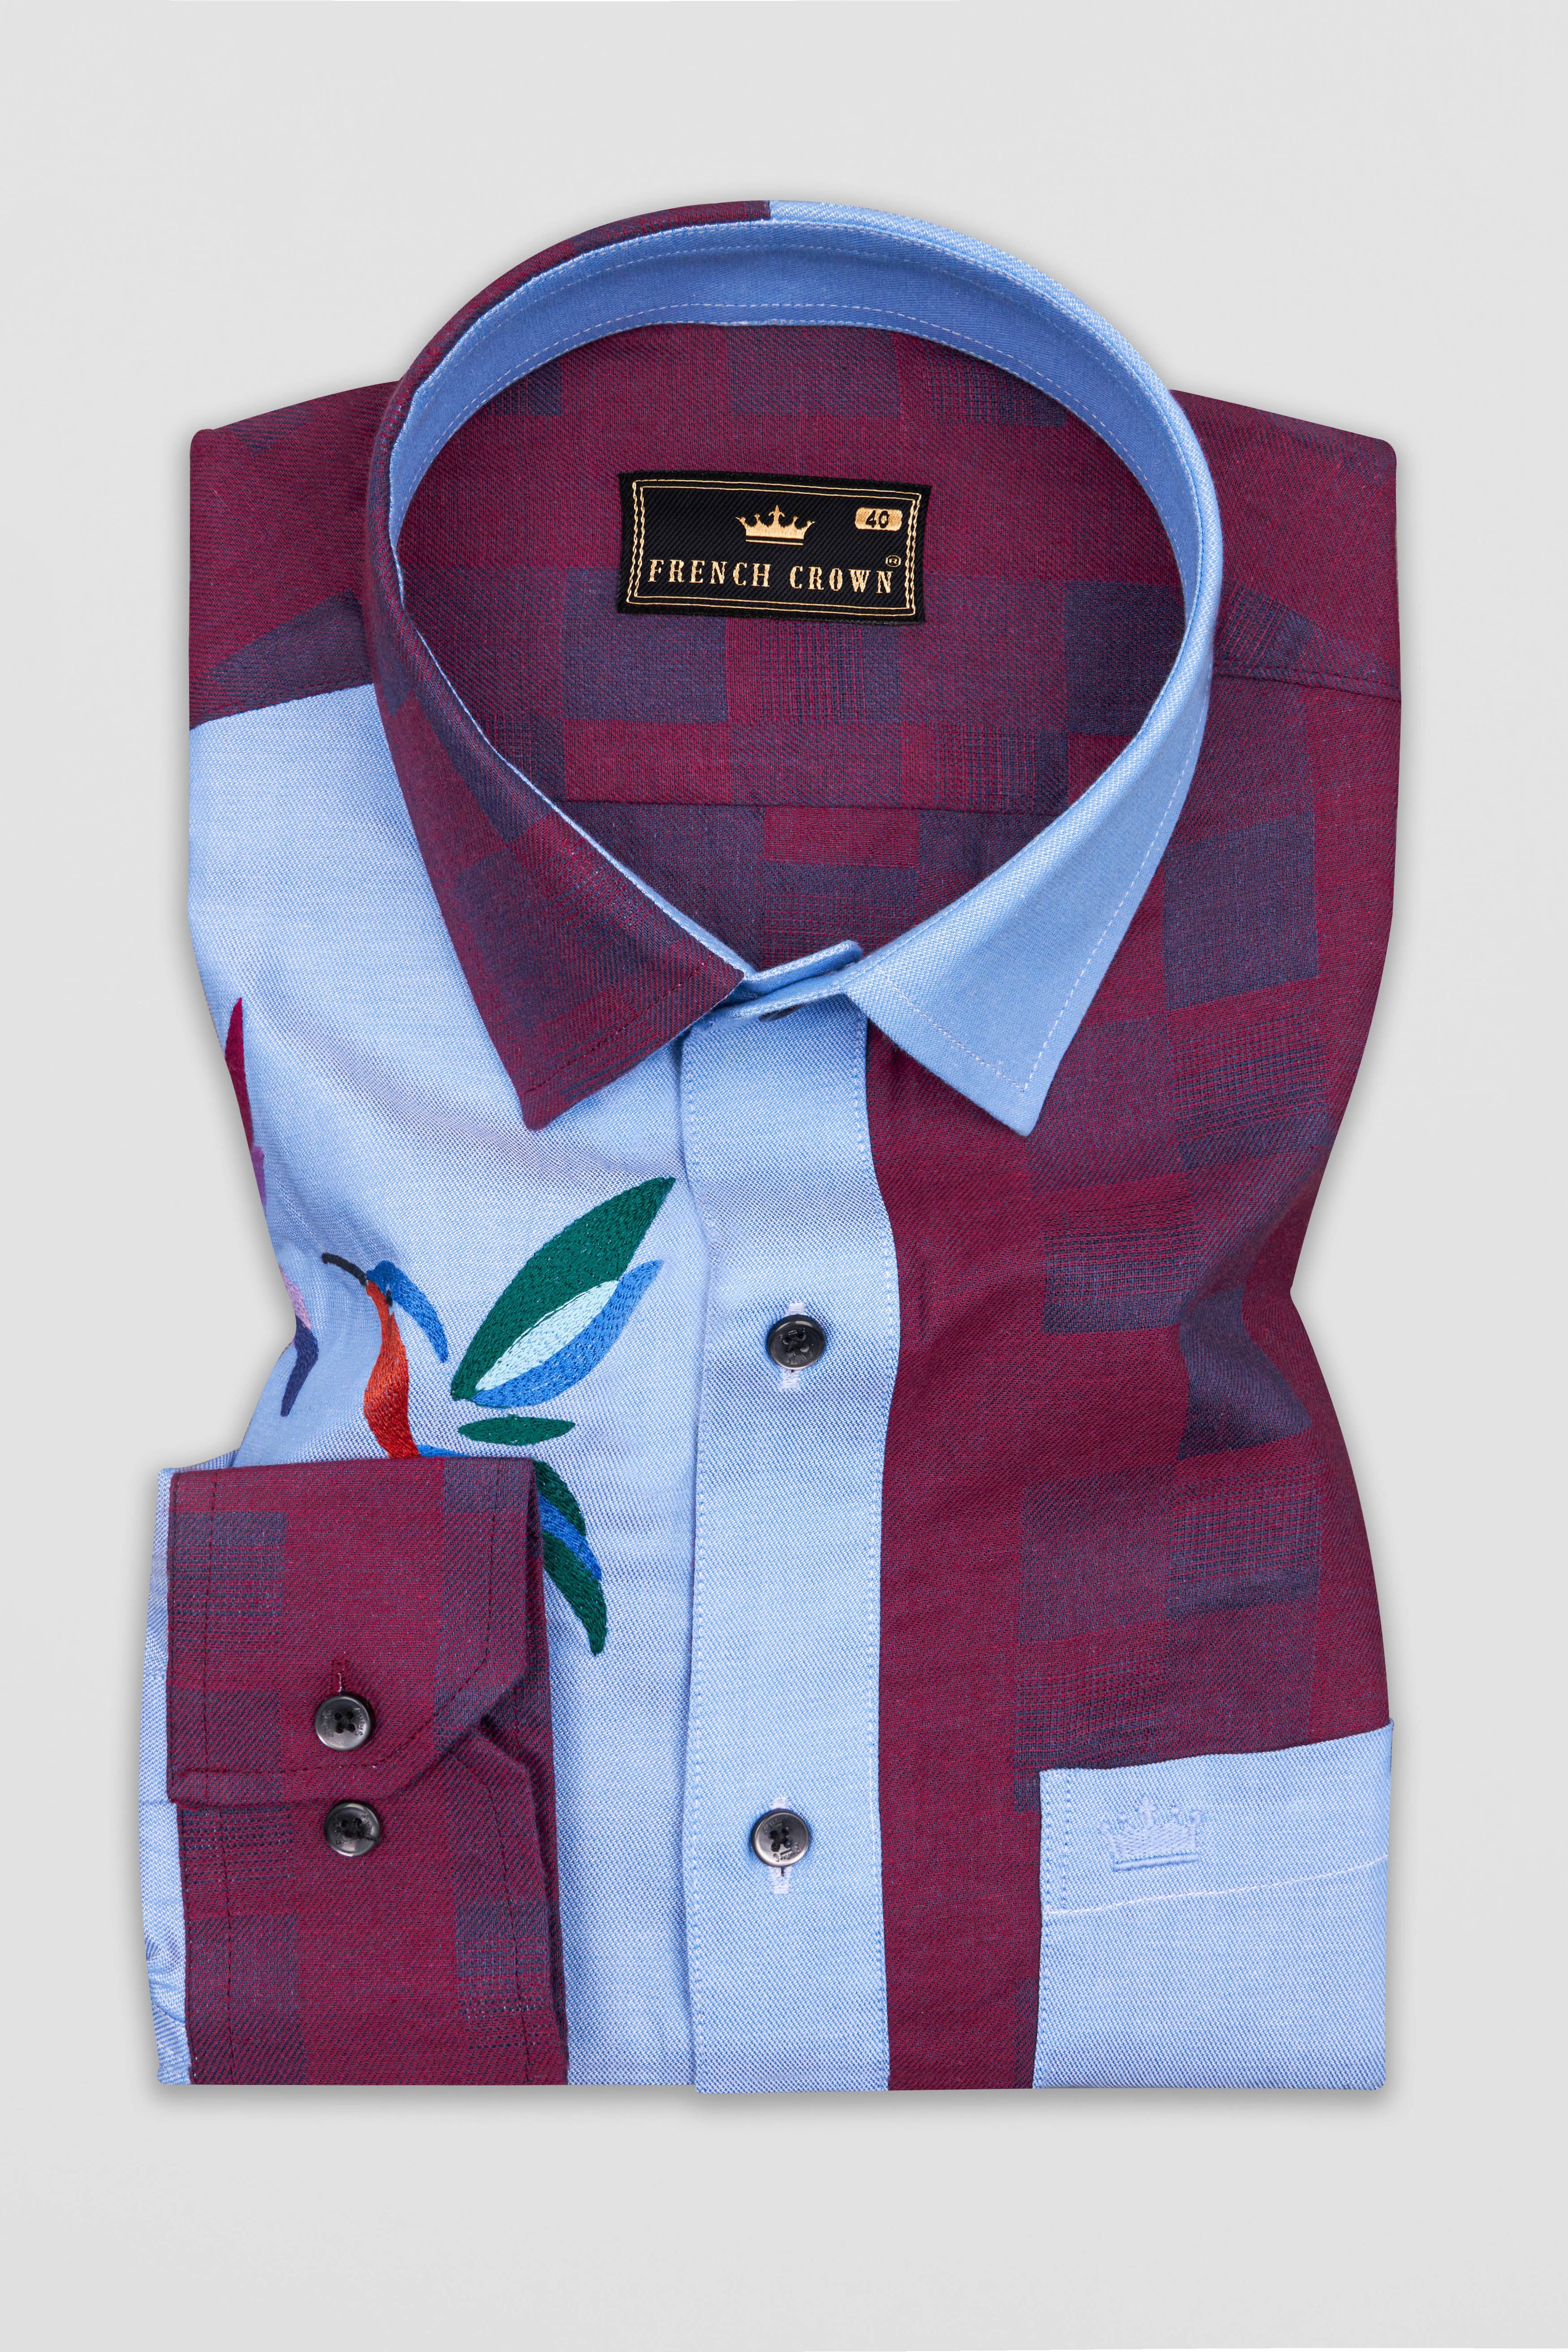 Casper Blue And Eclipse Wine Bird Embroidered Jacquard Textured Premium Cotton Designer Shirt.